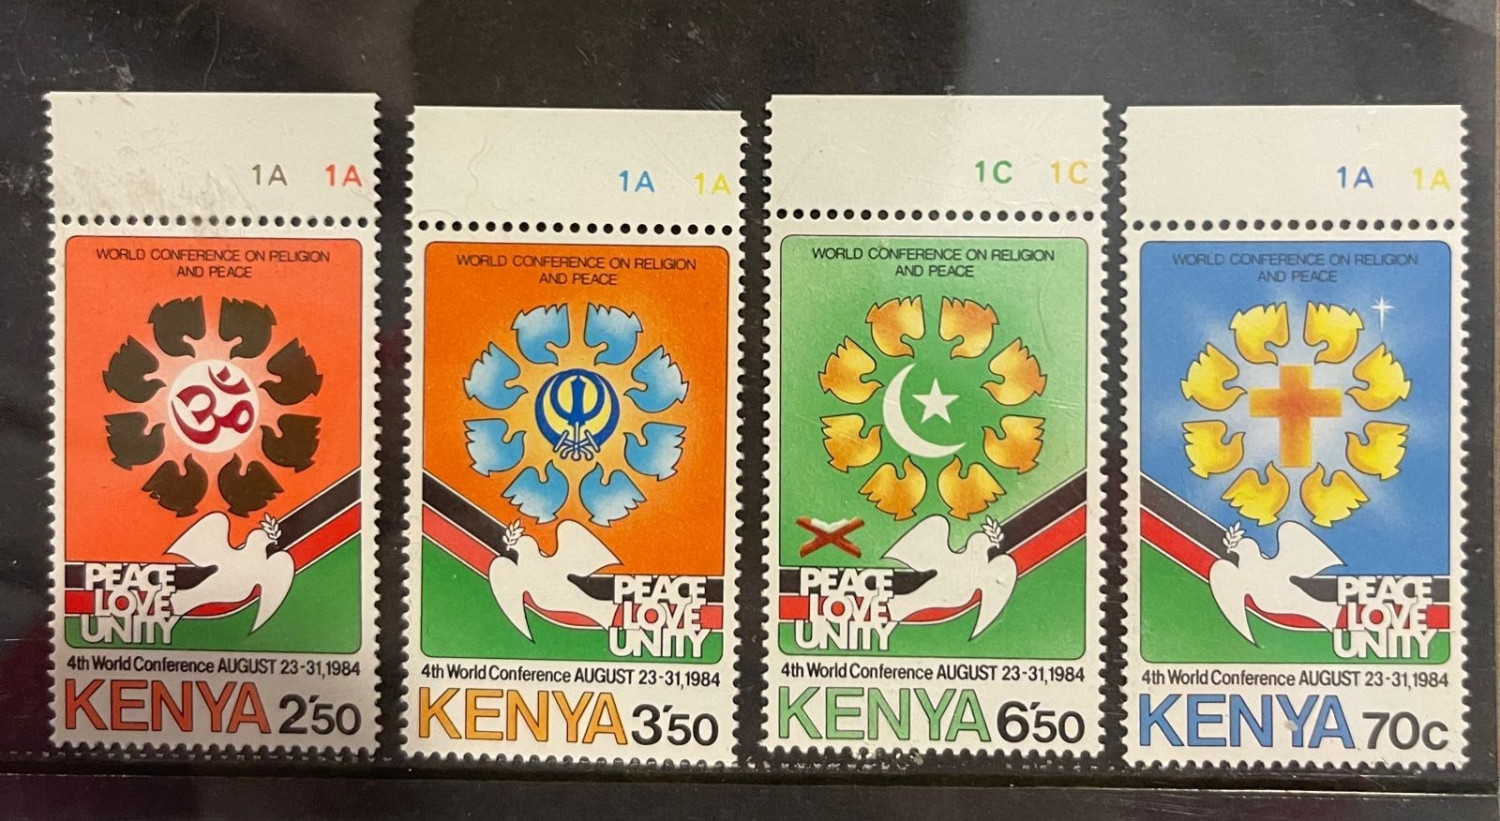 Kenya 1984 World Peace Conference Religions Symbols Hindu Sikh Muslim Christian Symbols 4v set MNH